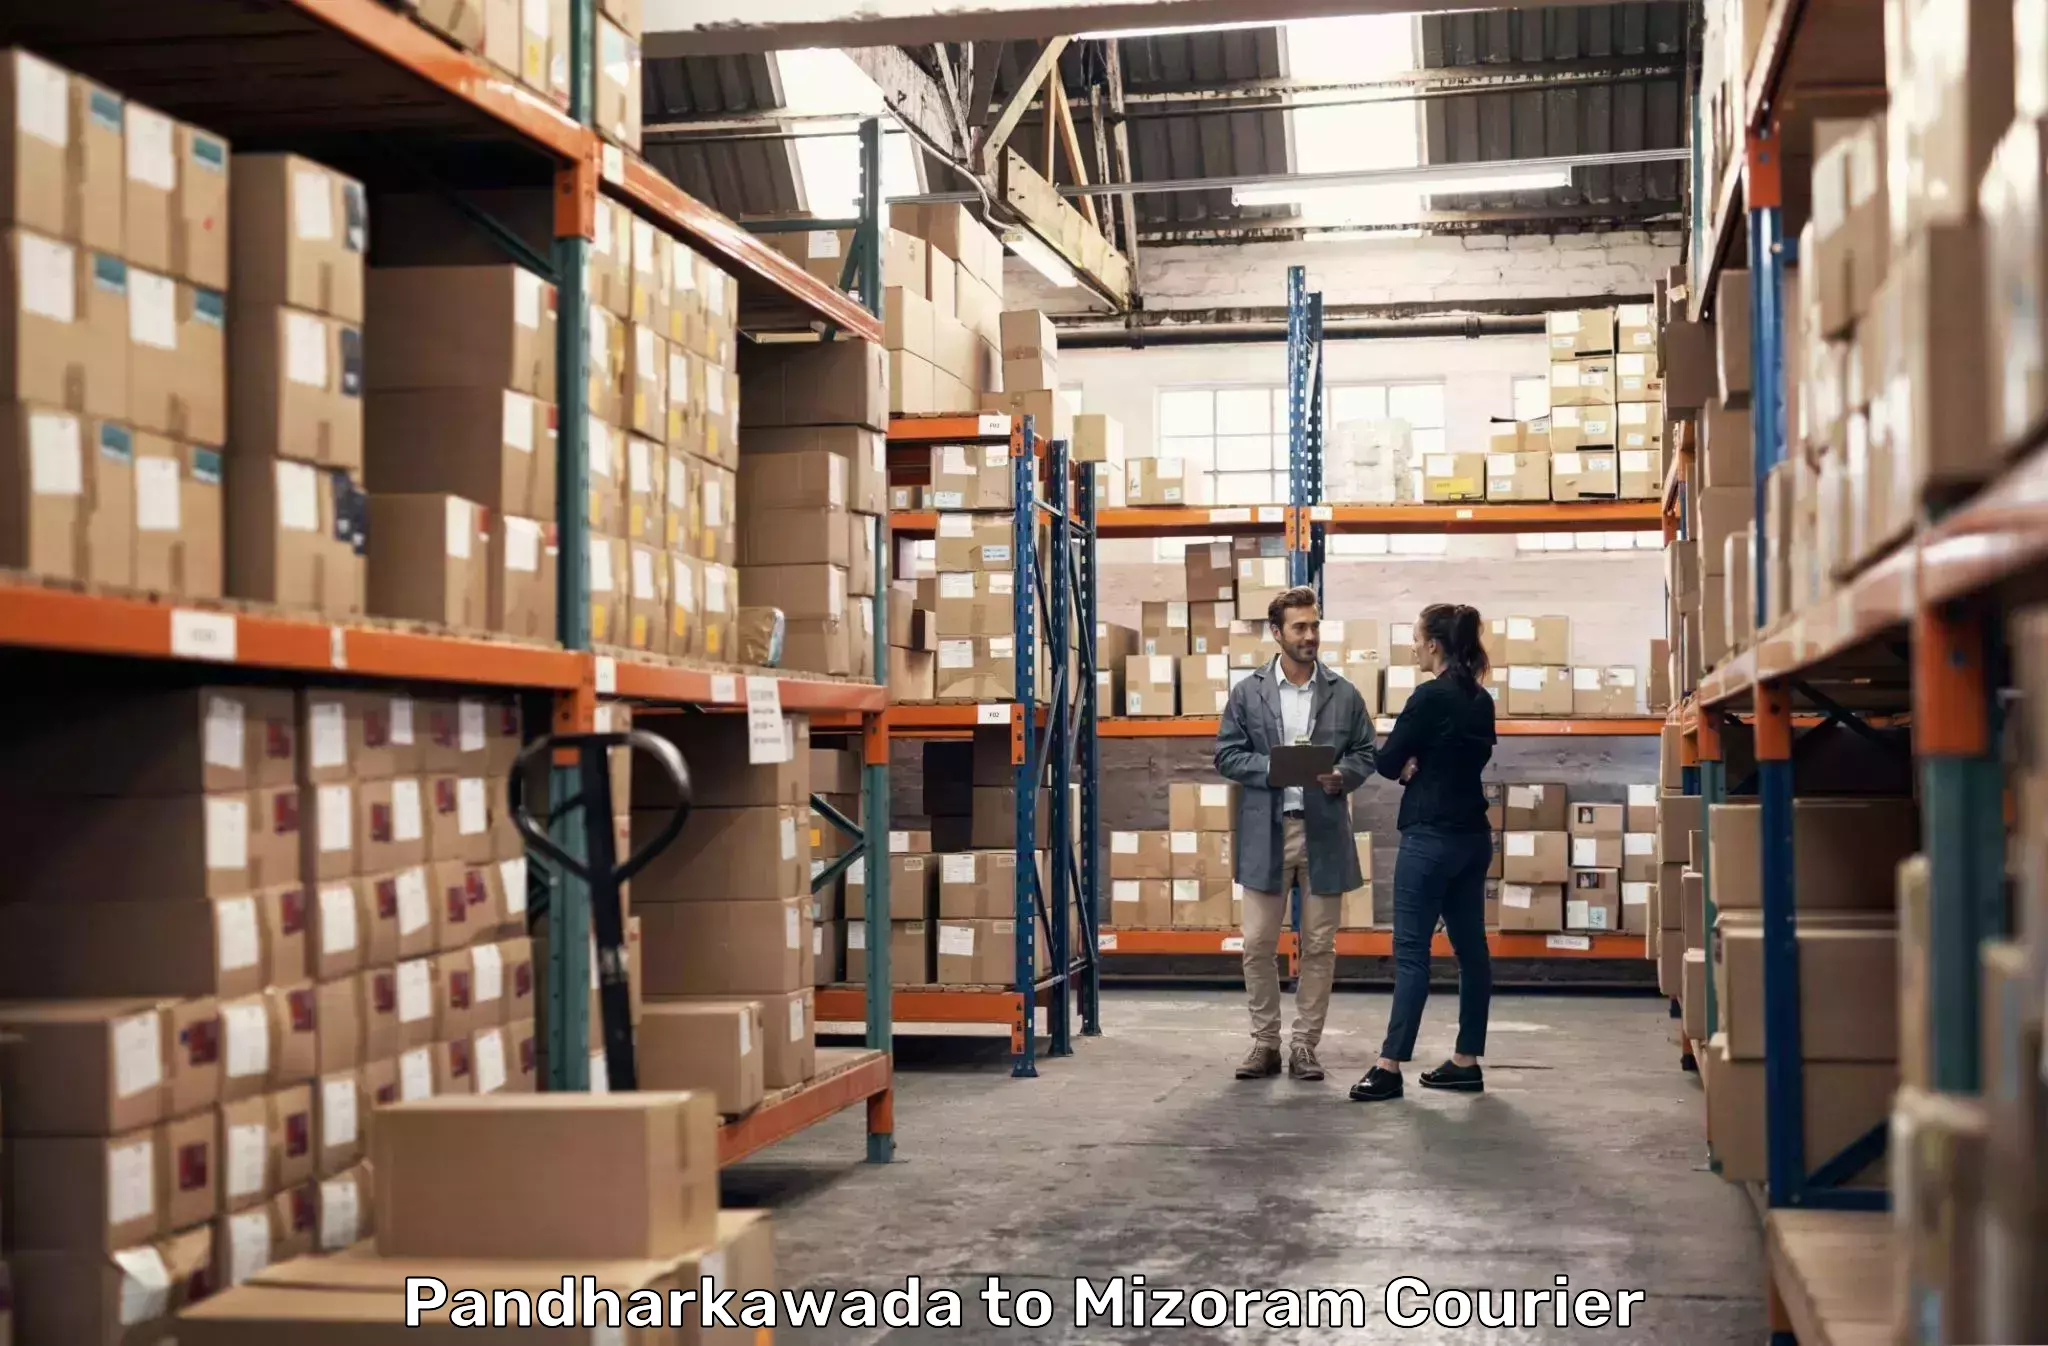 Express delivery capabilities Pandharkawada to Mizoram